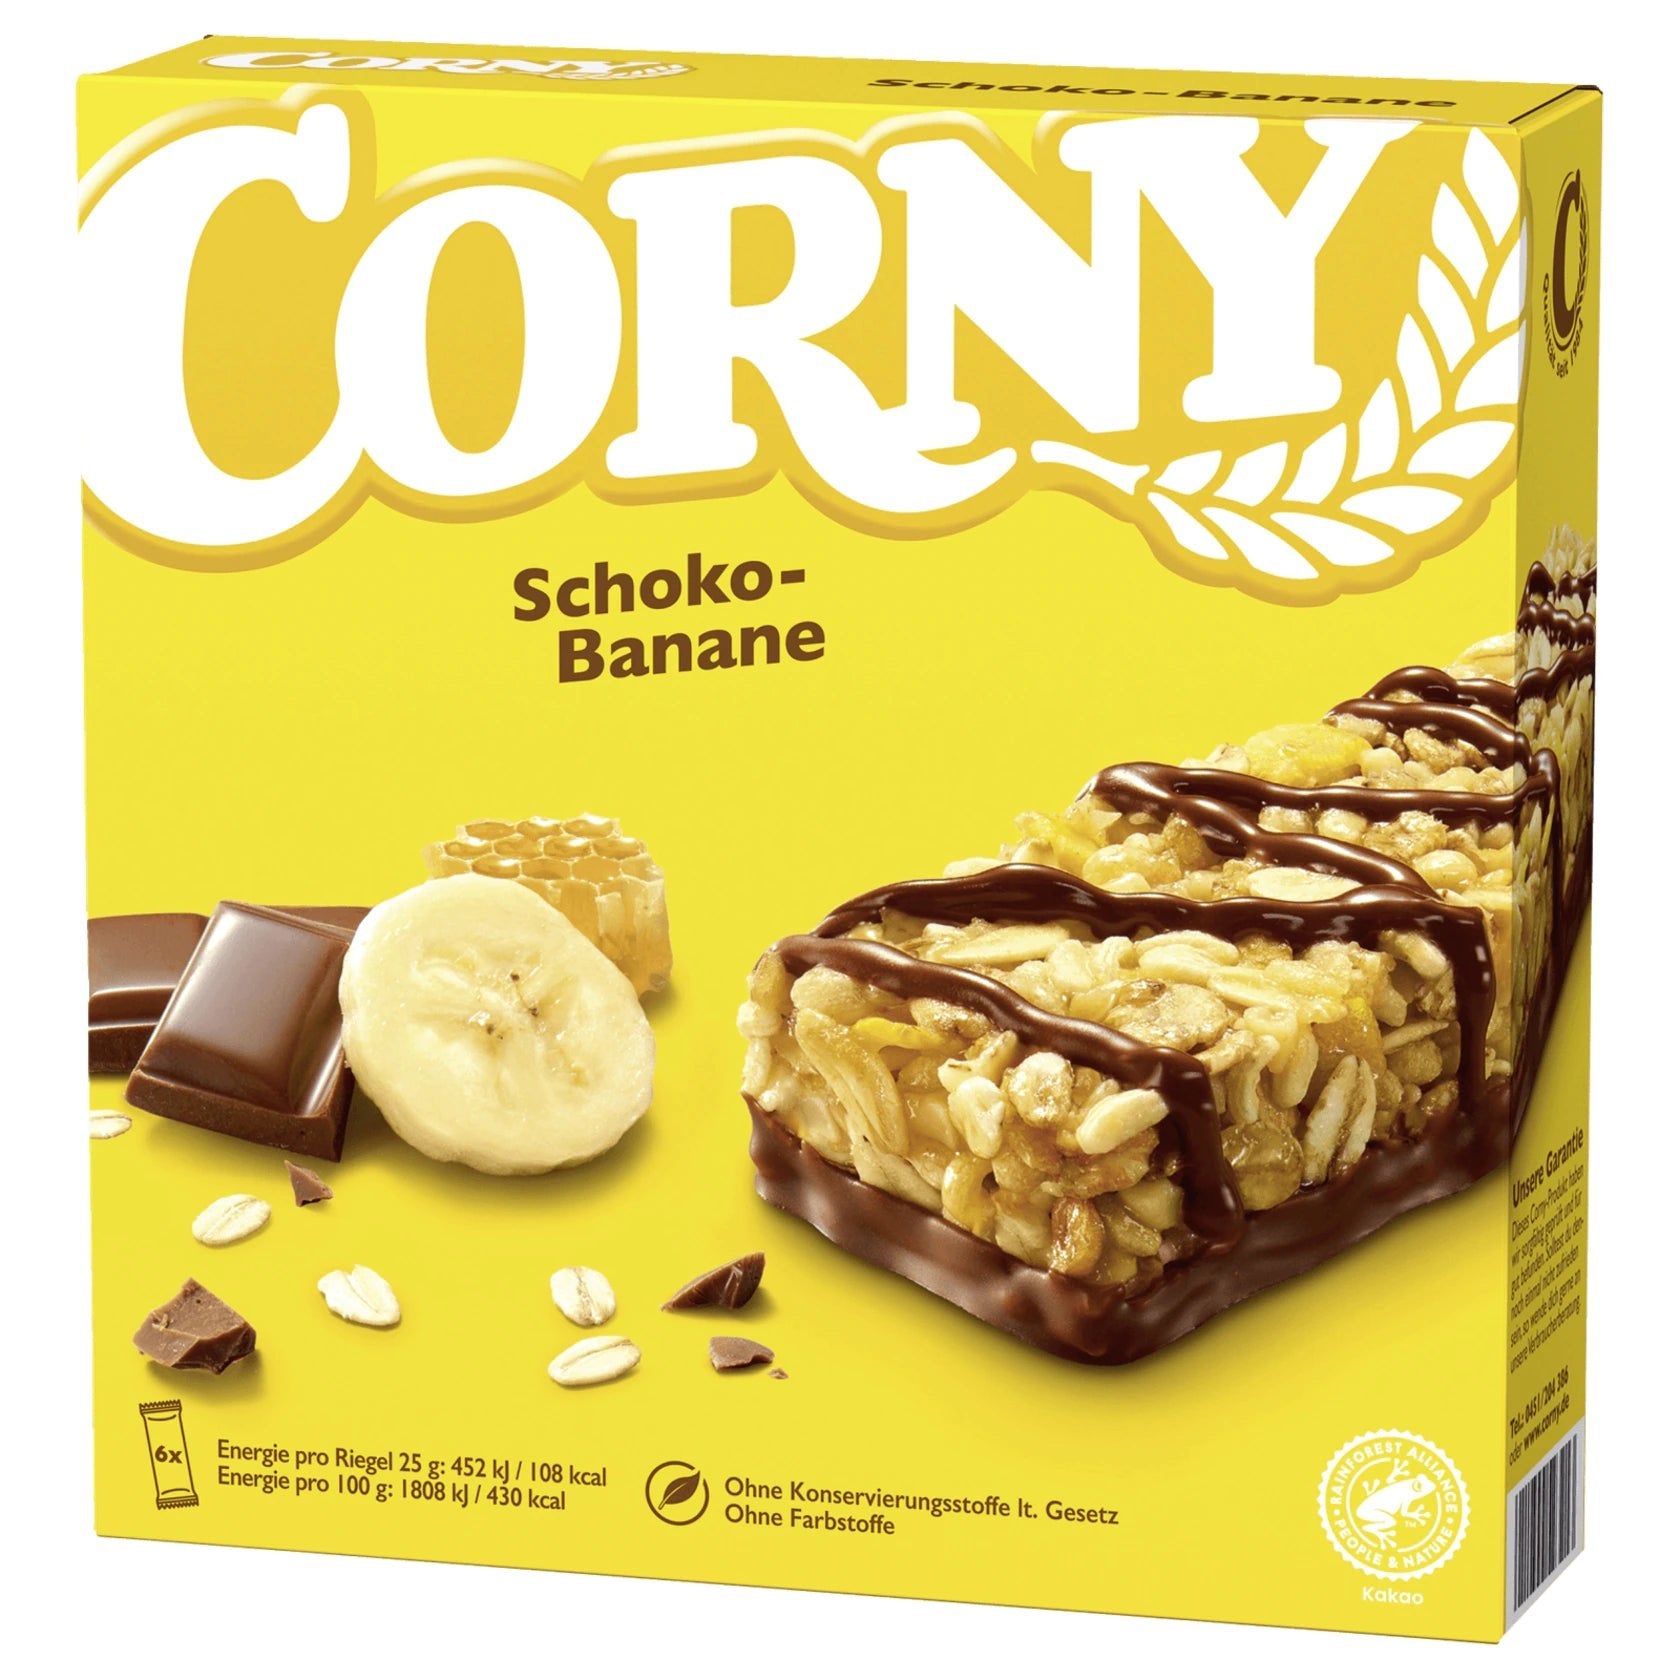 Corny Schoko-Banane 6x25g - küblerGo